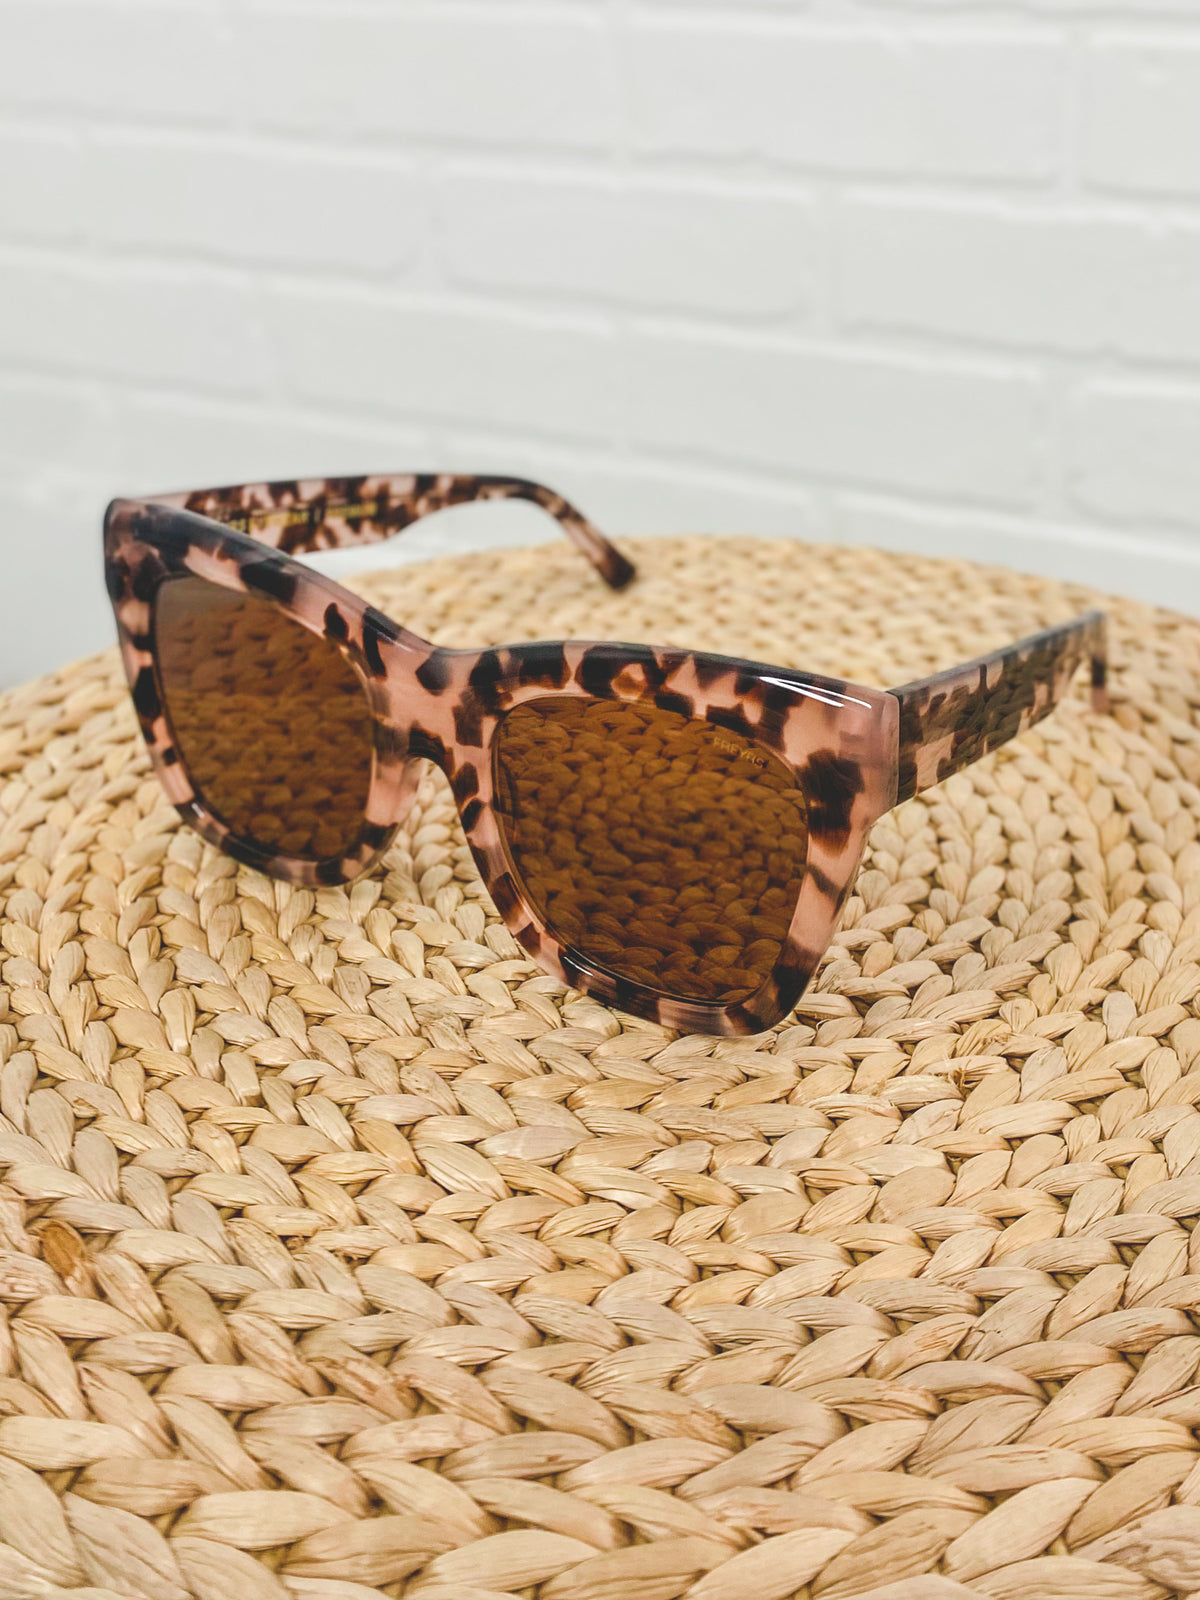 Freyrs Palermo sunglasses pink tortoise - Stylish Sunglasses - Trendy Glasses at Lush Fashion Lounge Boutique in Oklahoma